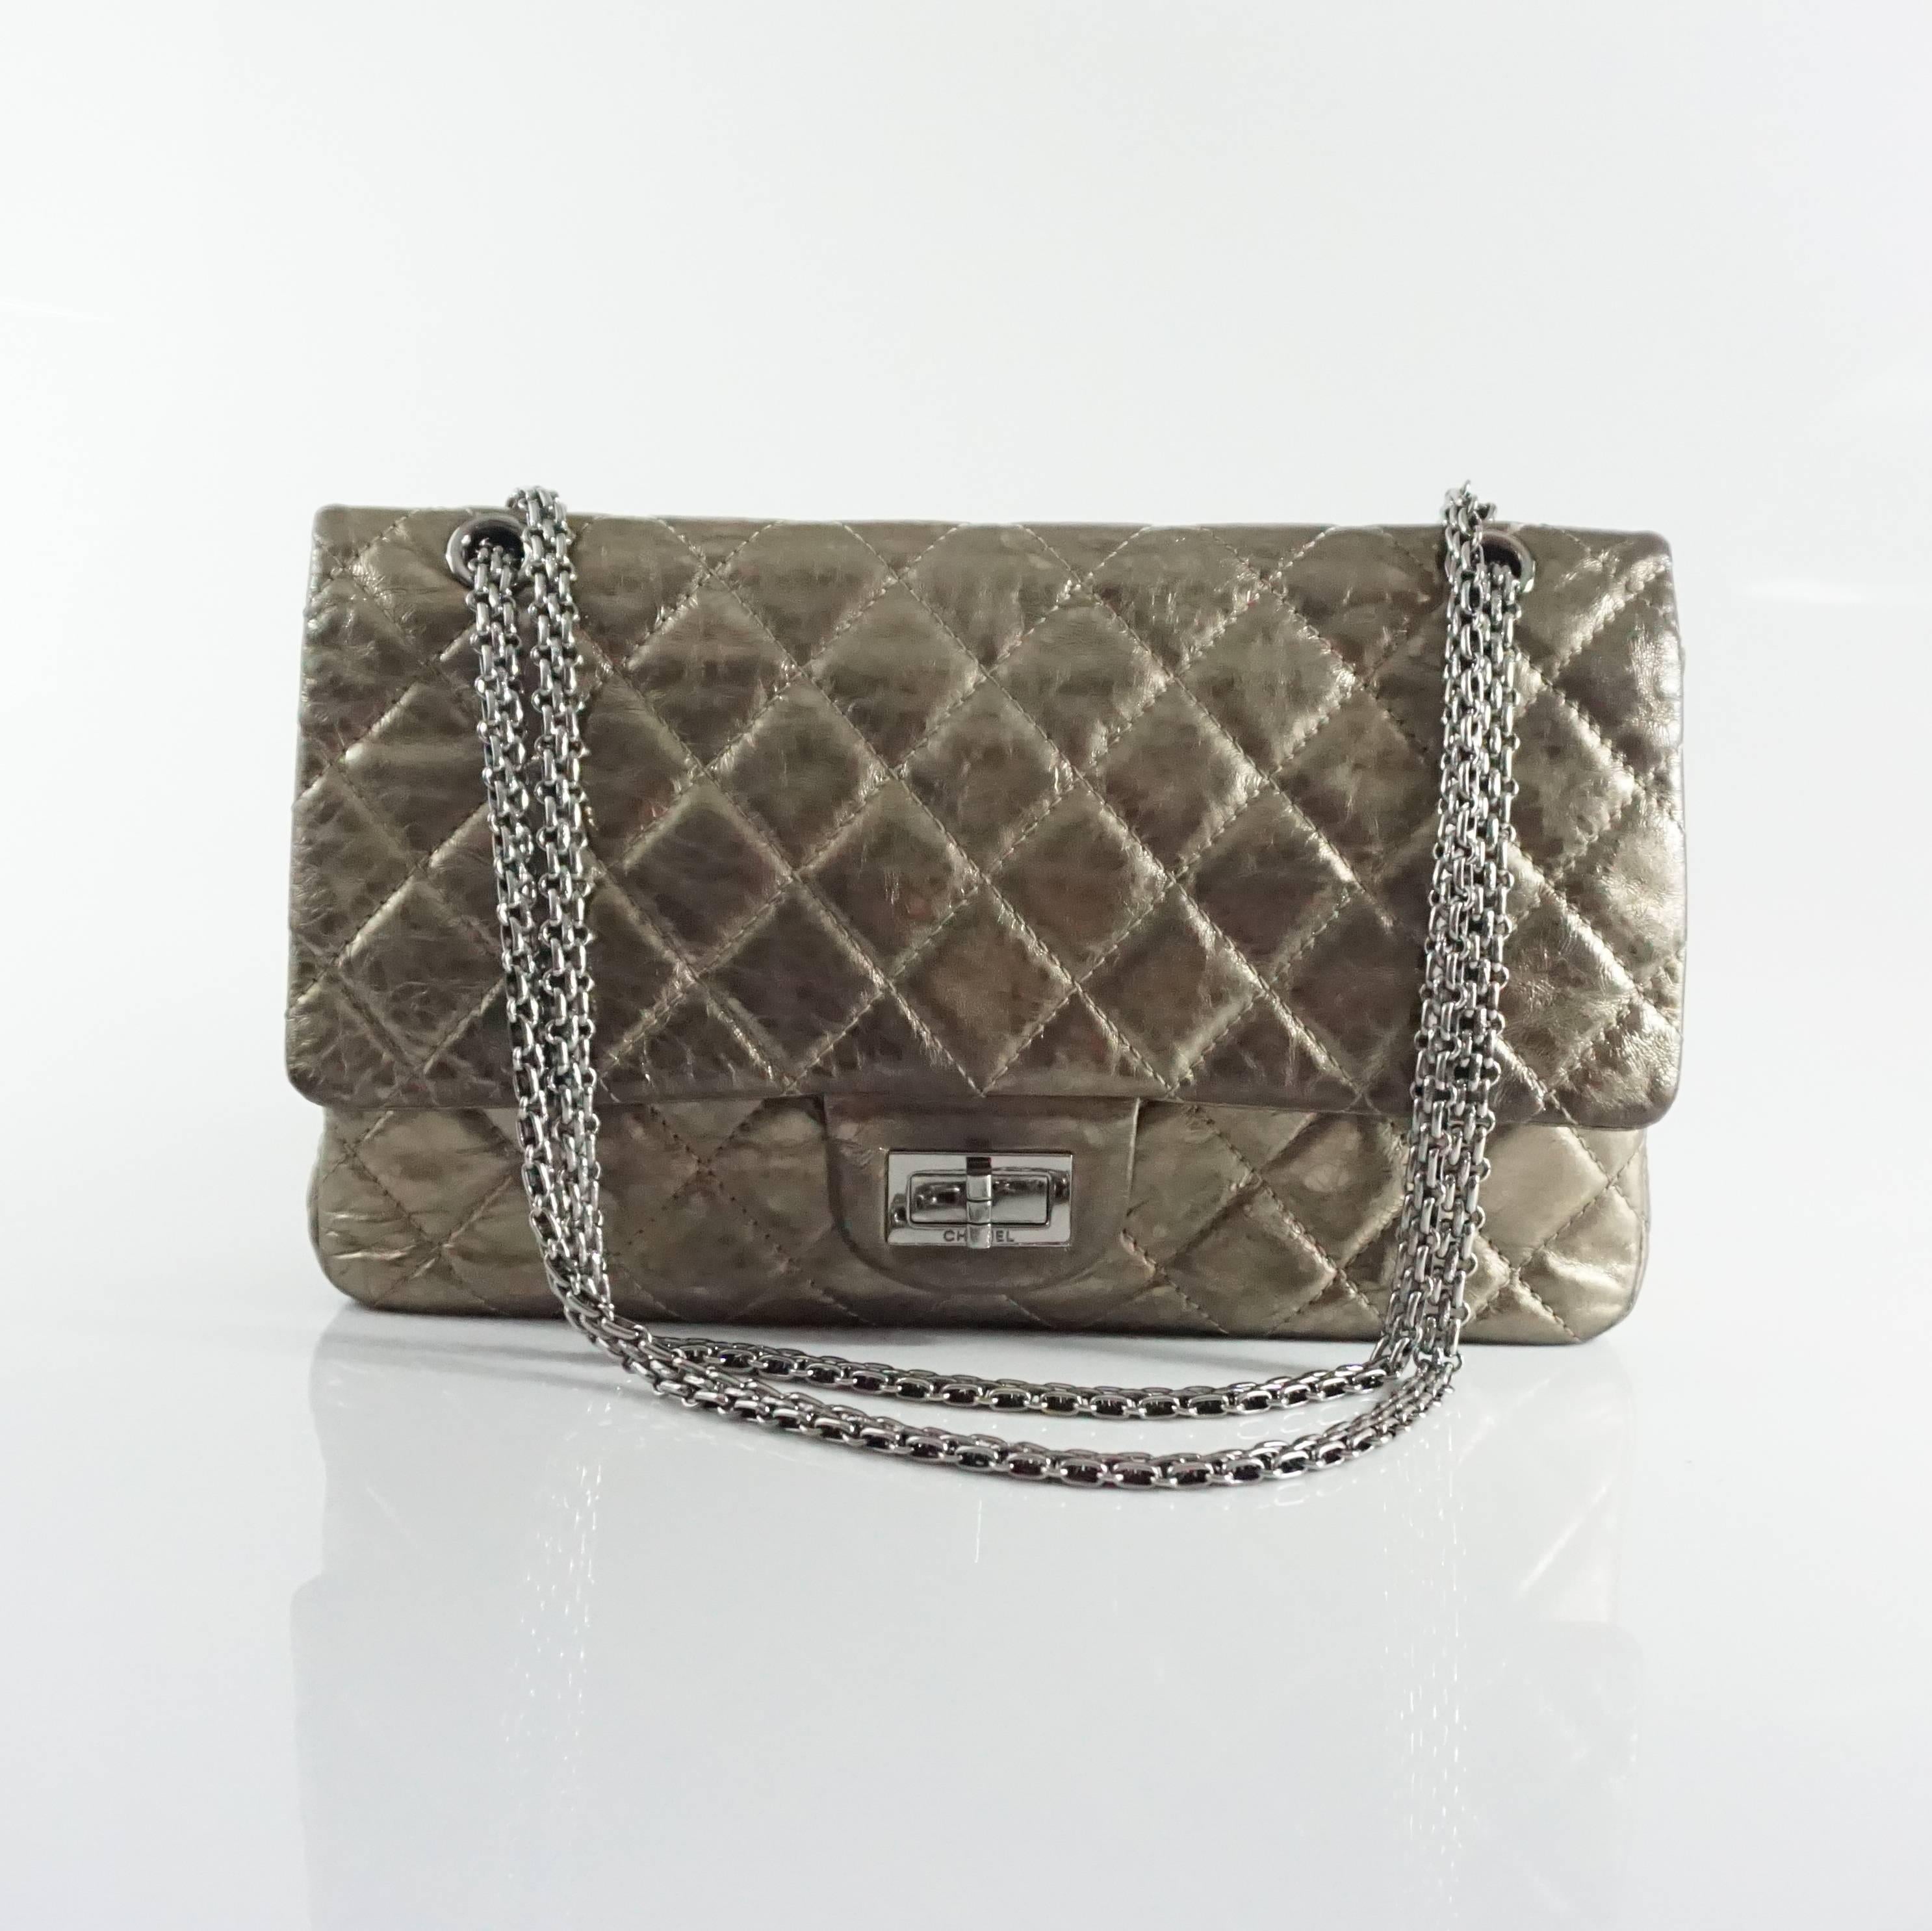 Women's Chanel Pewter 2.55 Reissue 227 Double Flap Bag - 2006 